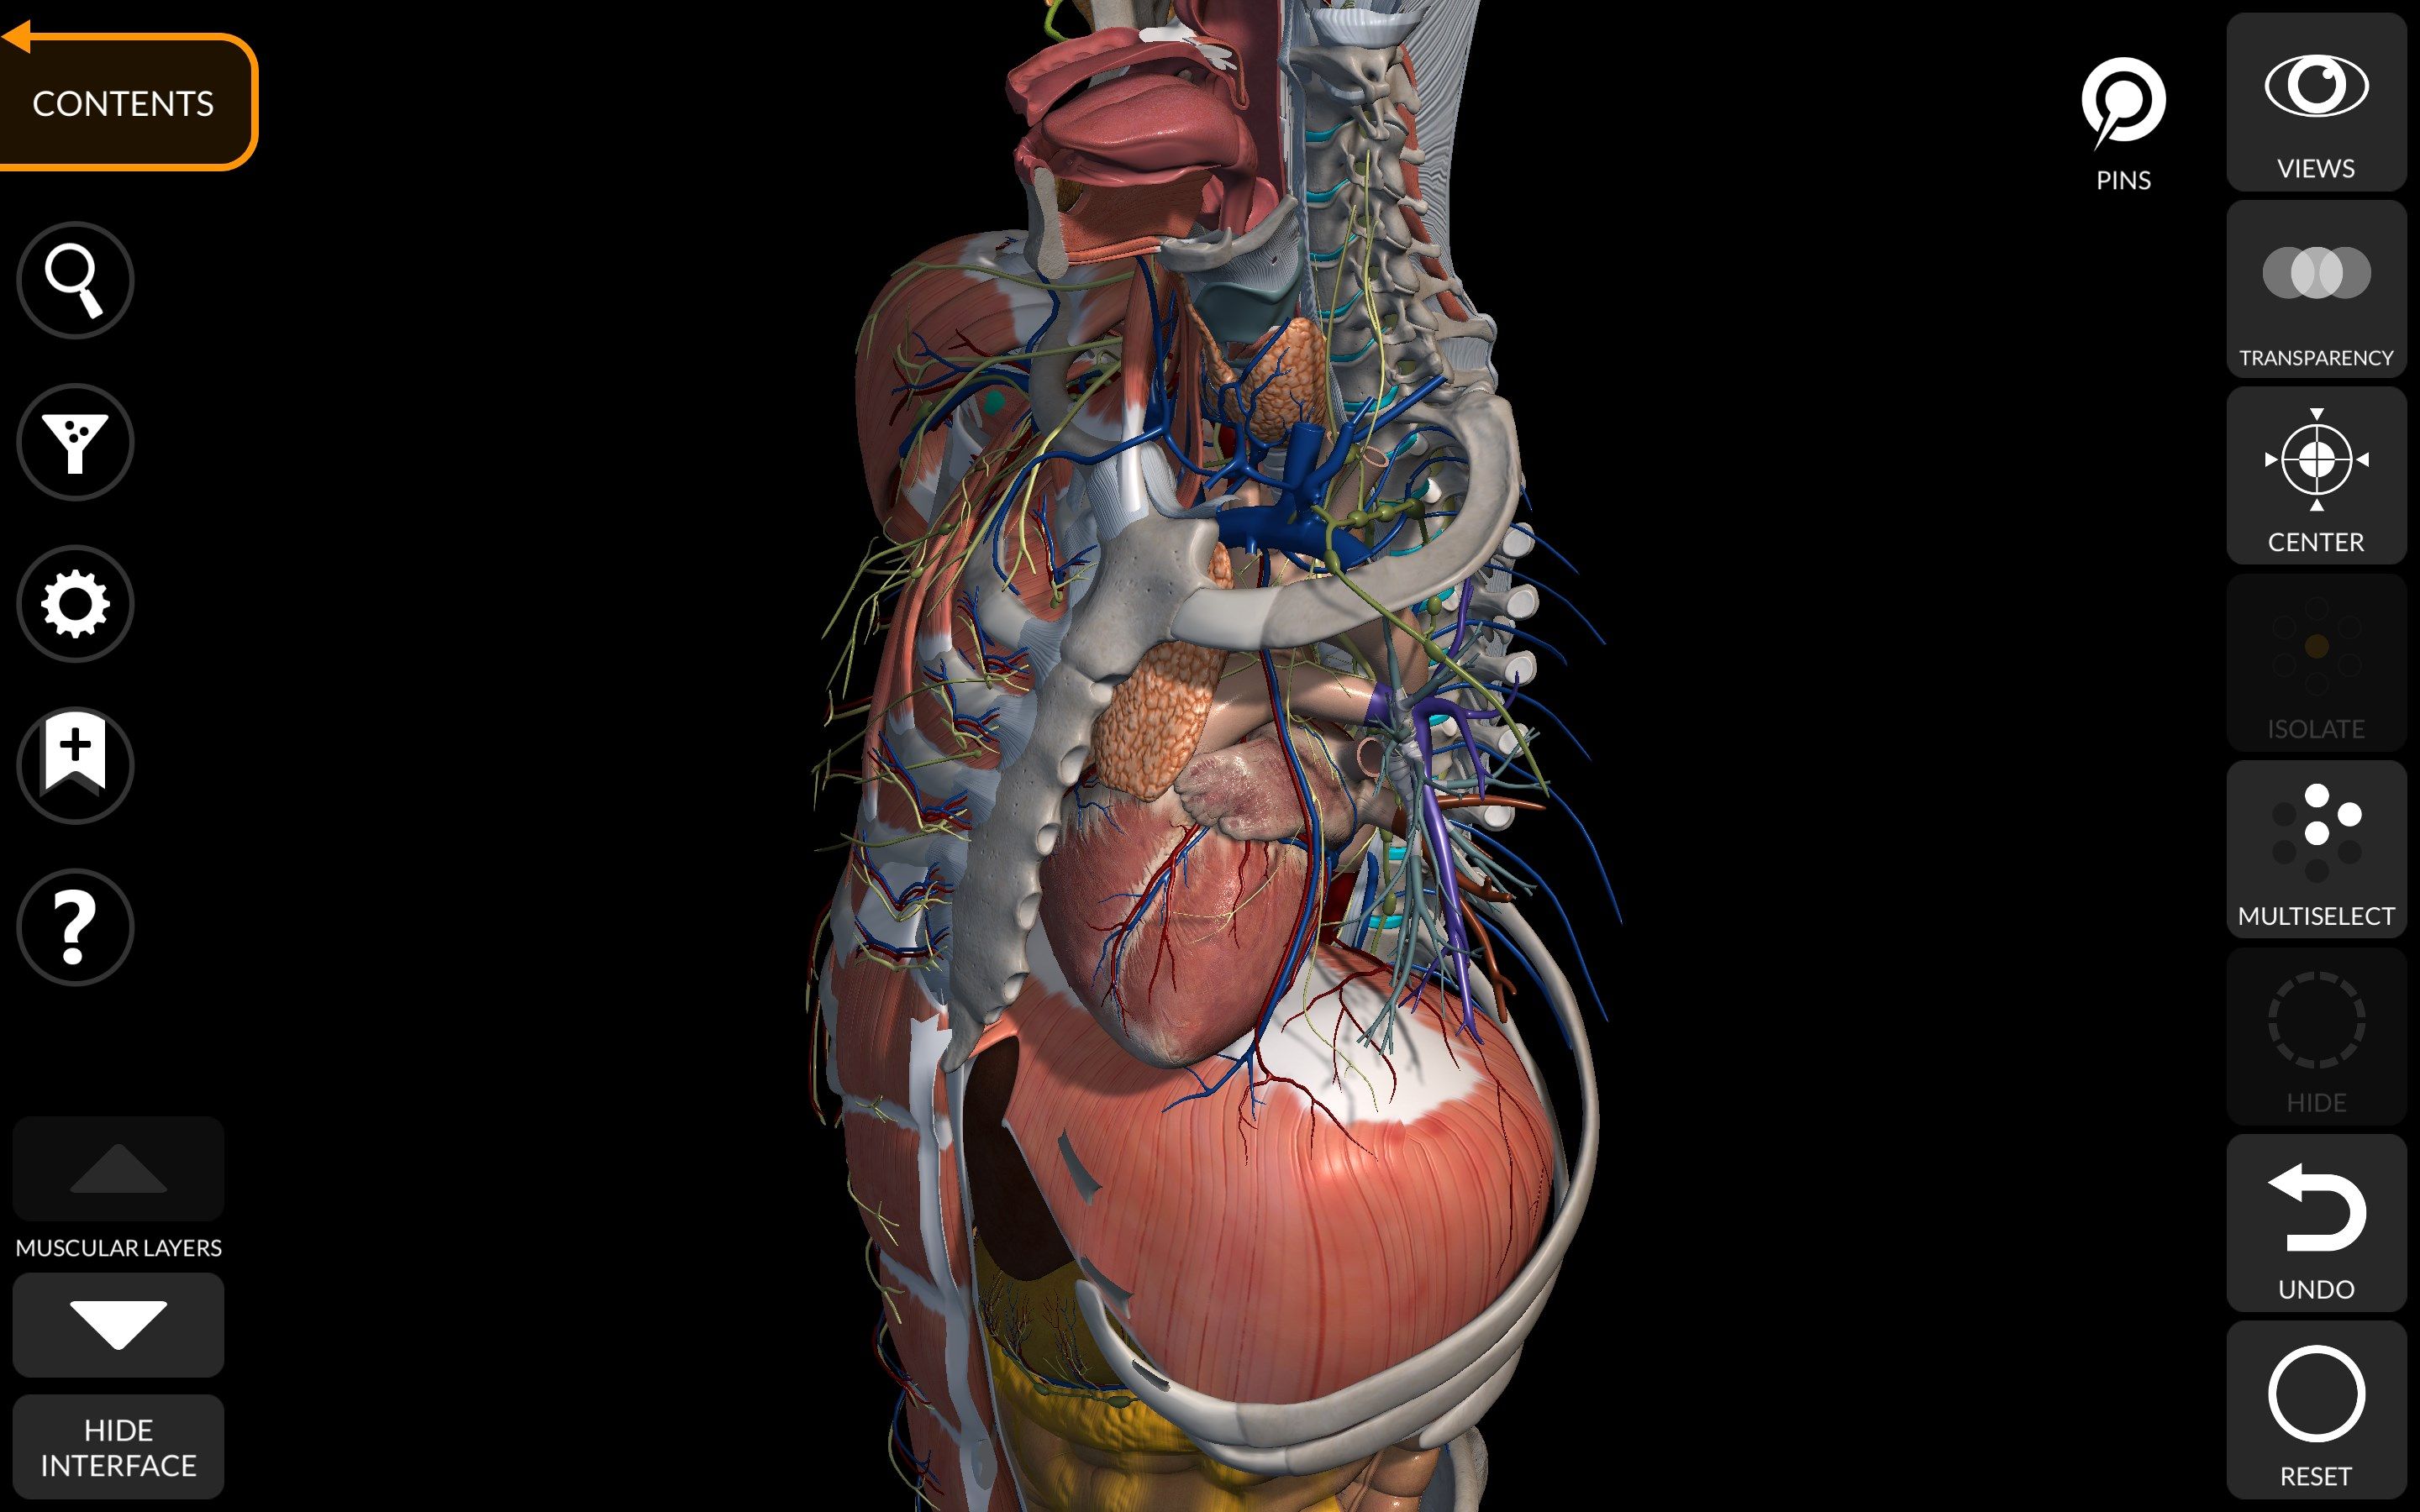 Anatomy 3D Atlas